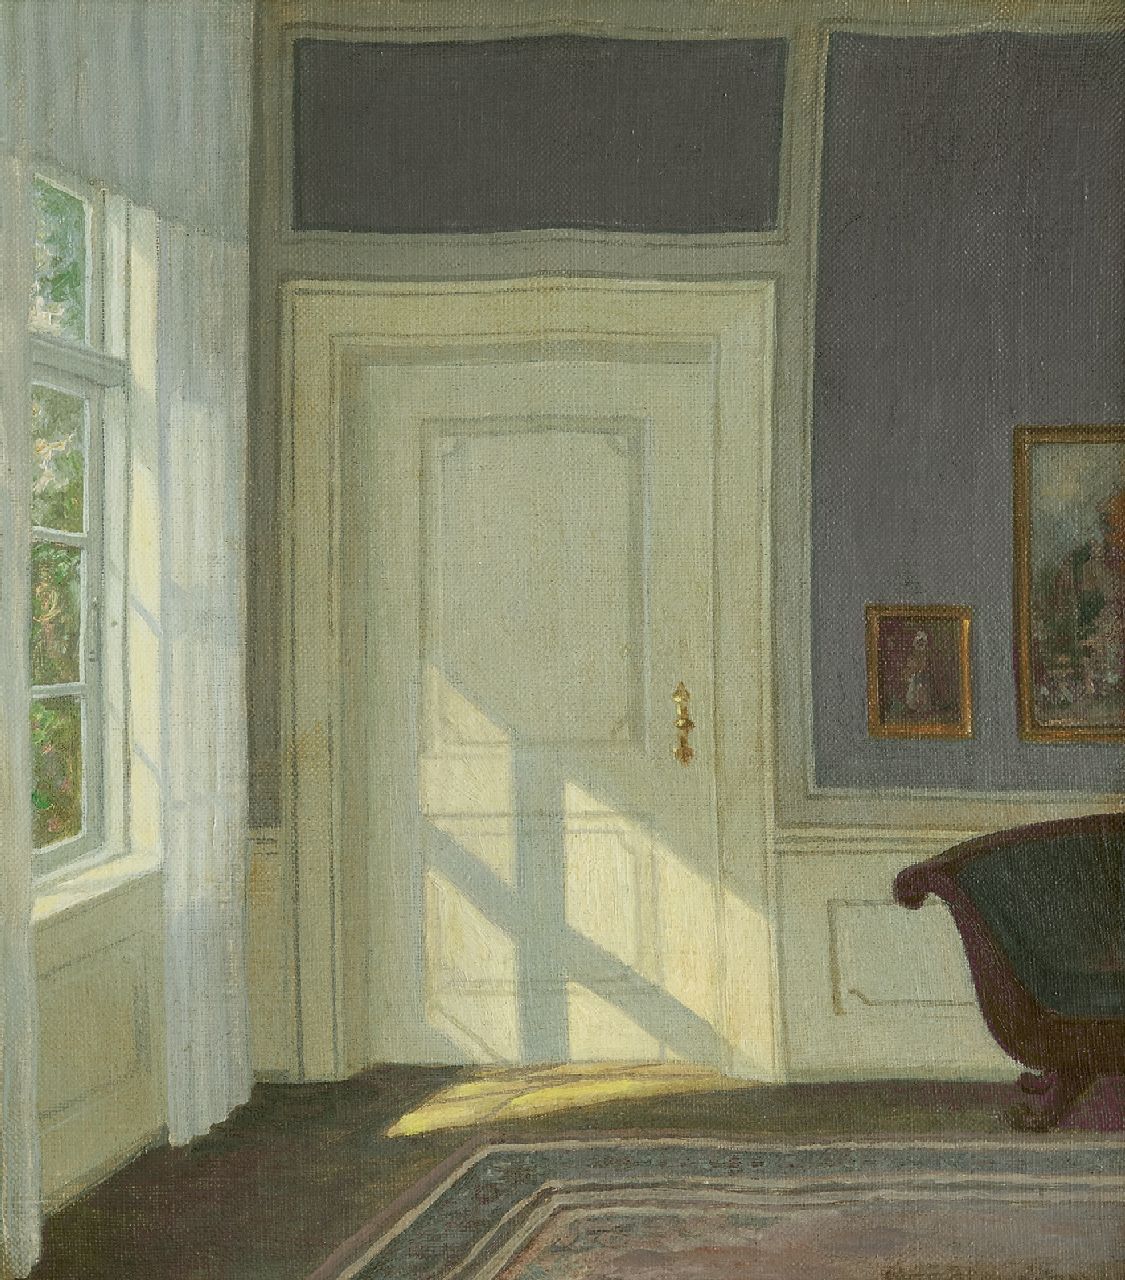 Henriksen W.  | William Henriksen, Interieur met zonlicht, olieverf op doek 33,7 x 30,1 cm, gesigneerd rechtsonder